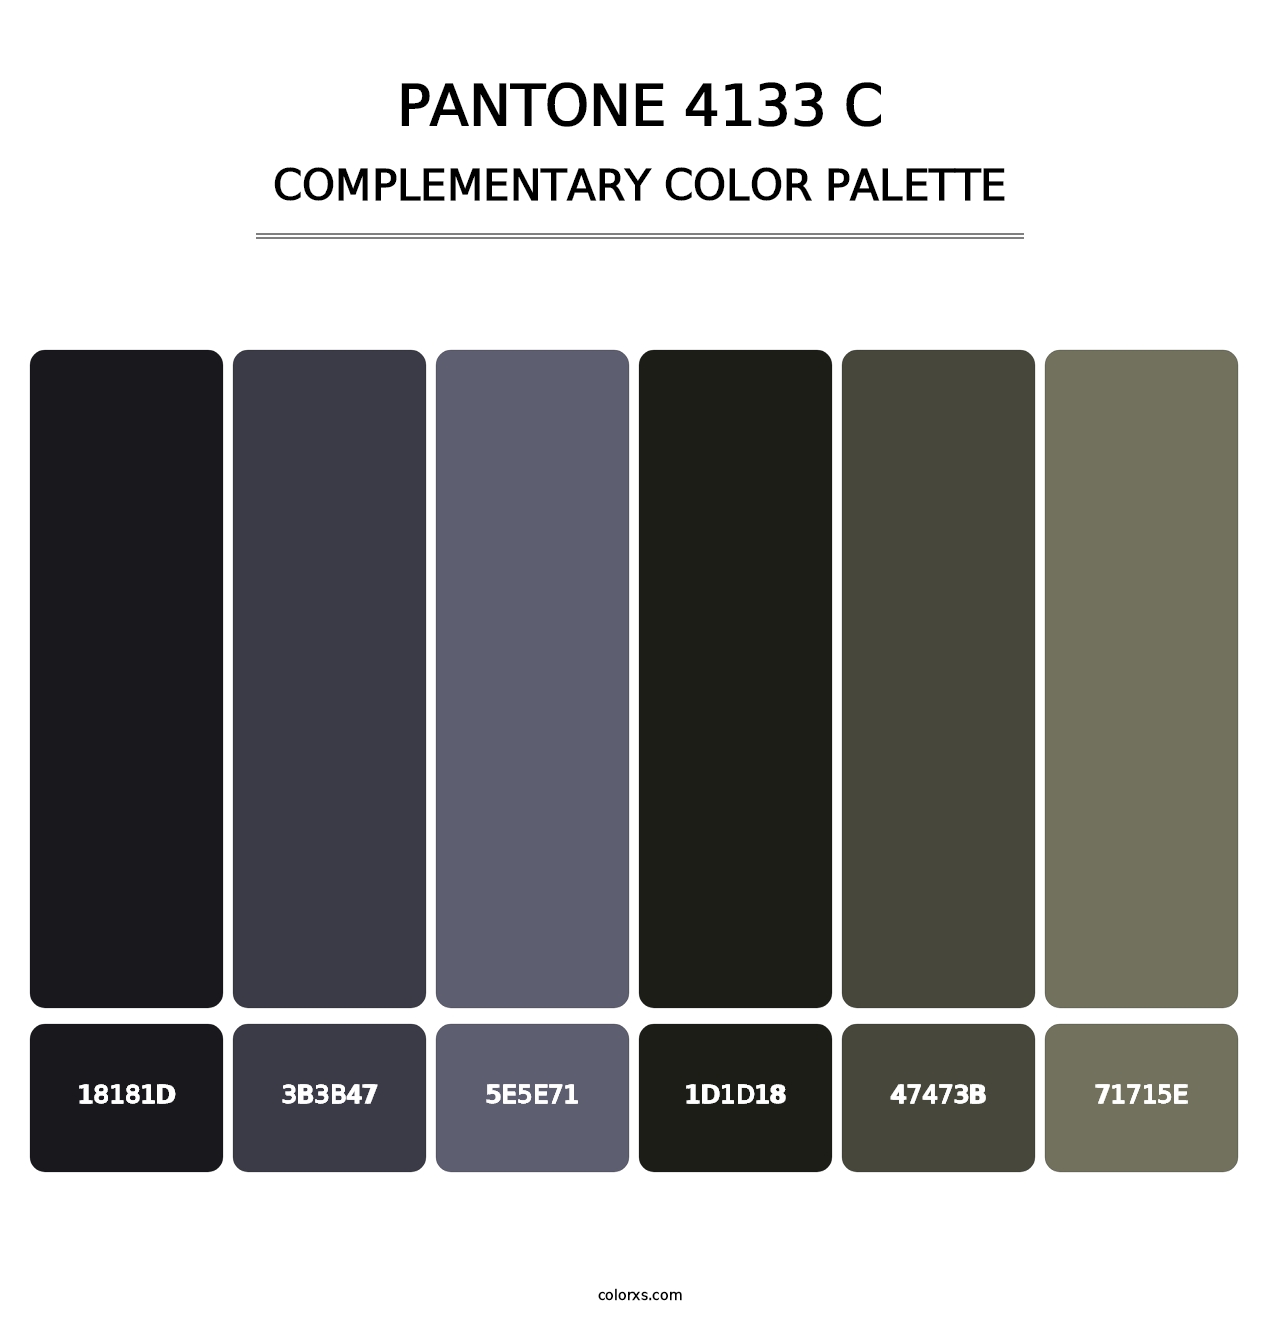 PANTONE 4133 C - Complementary Color Palette